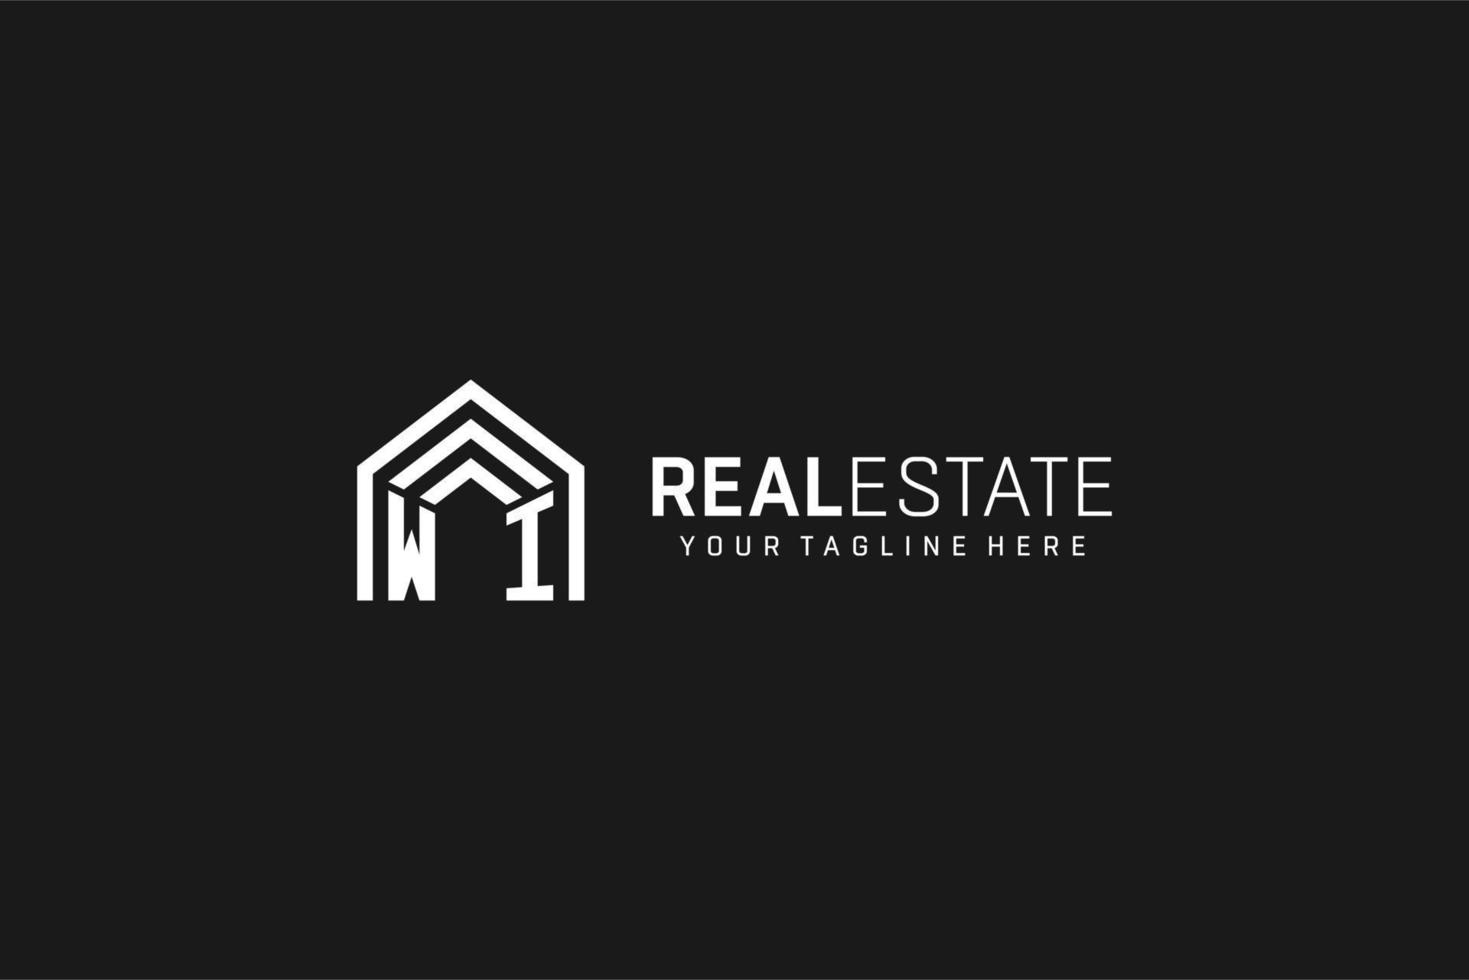 Letter WI house roof shape logo, creative real estate monogram logo style vector